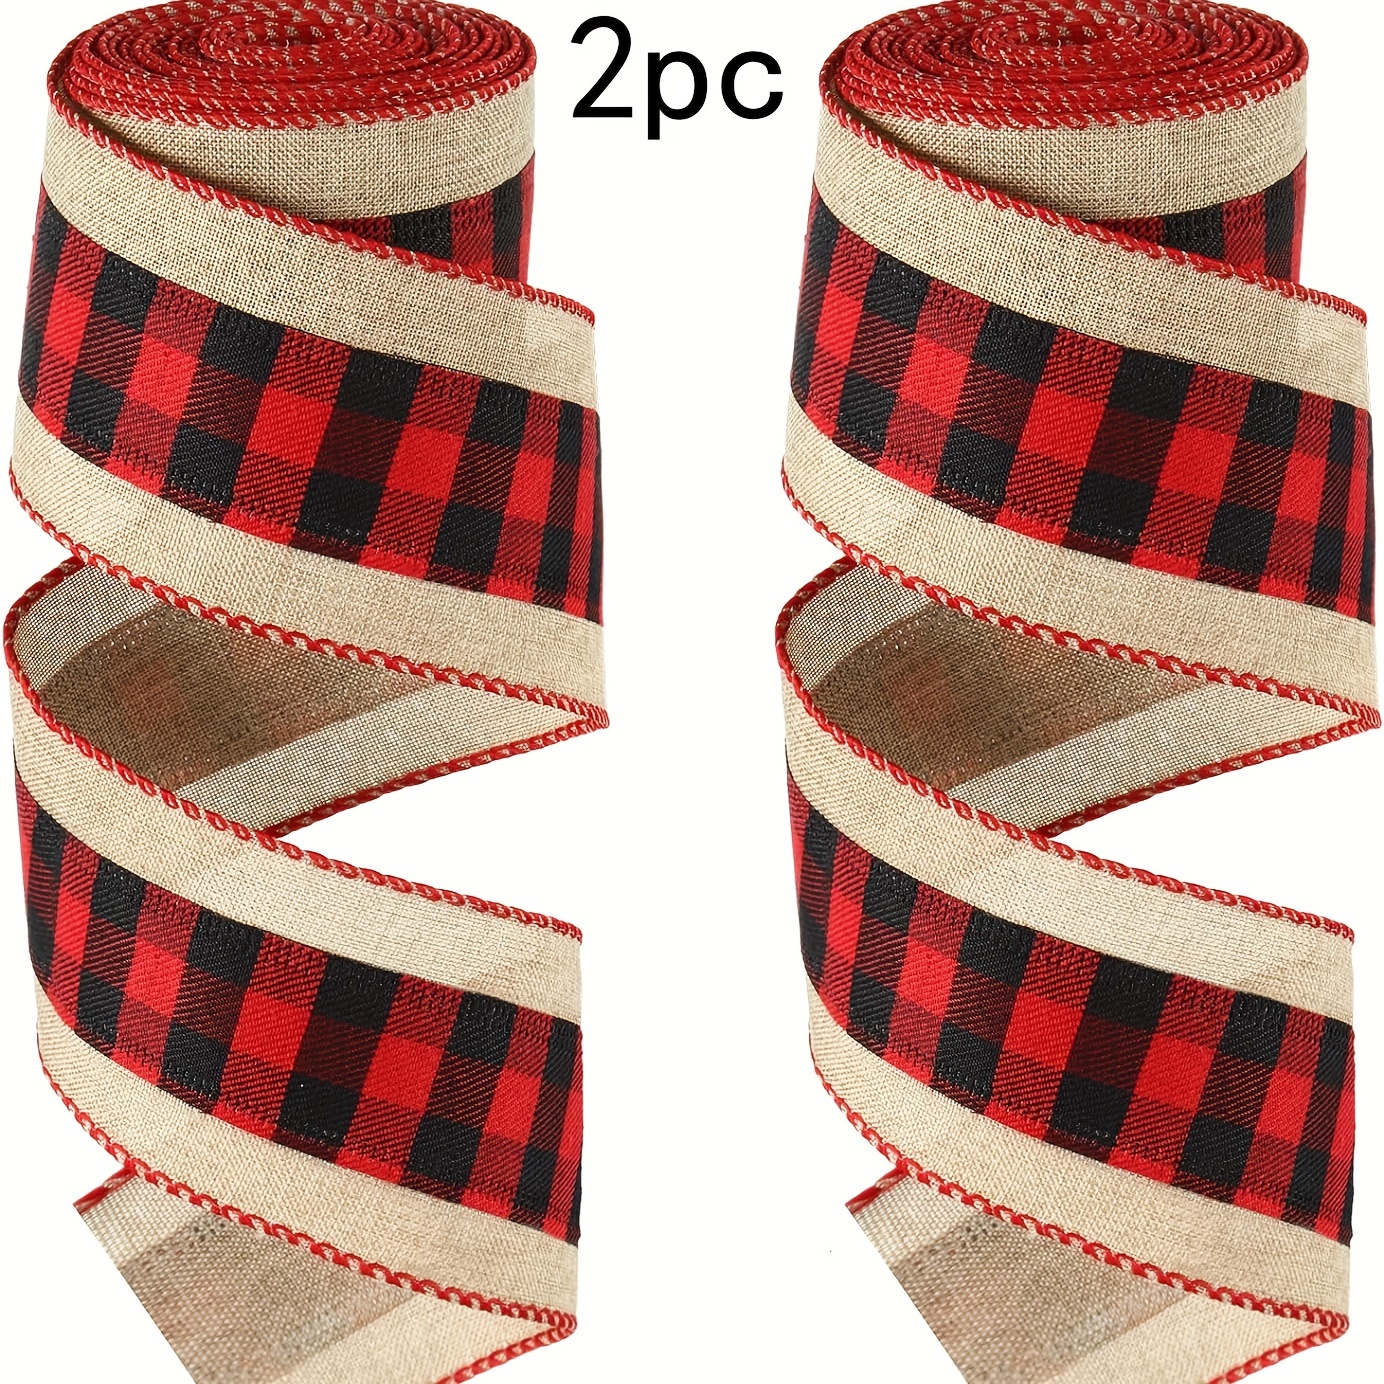 Decorative checkered ribbon - red, cream, gold - width 2.5 cm 